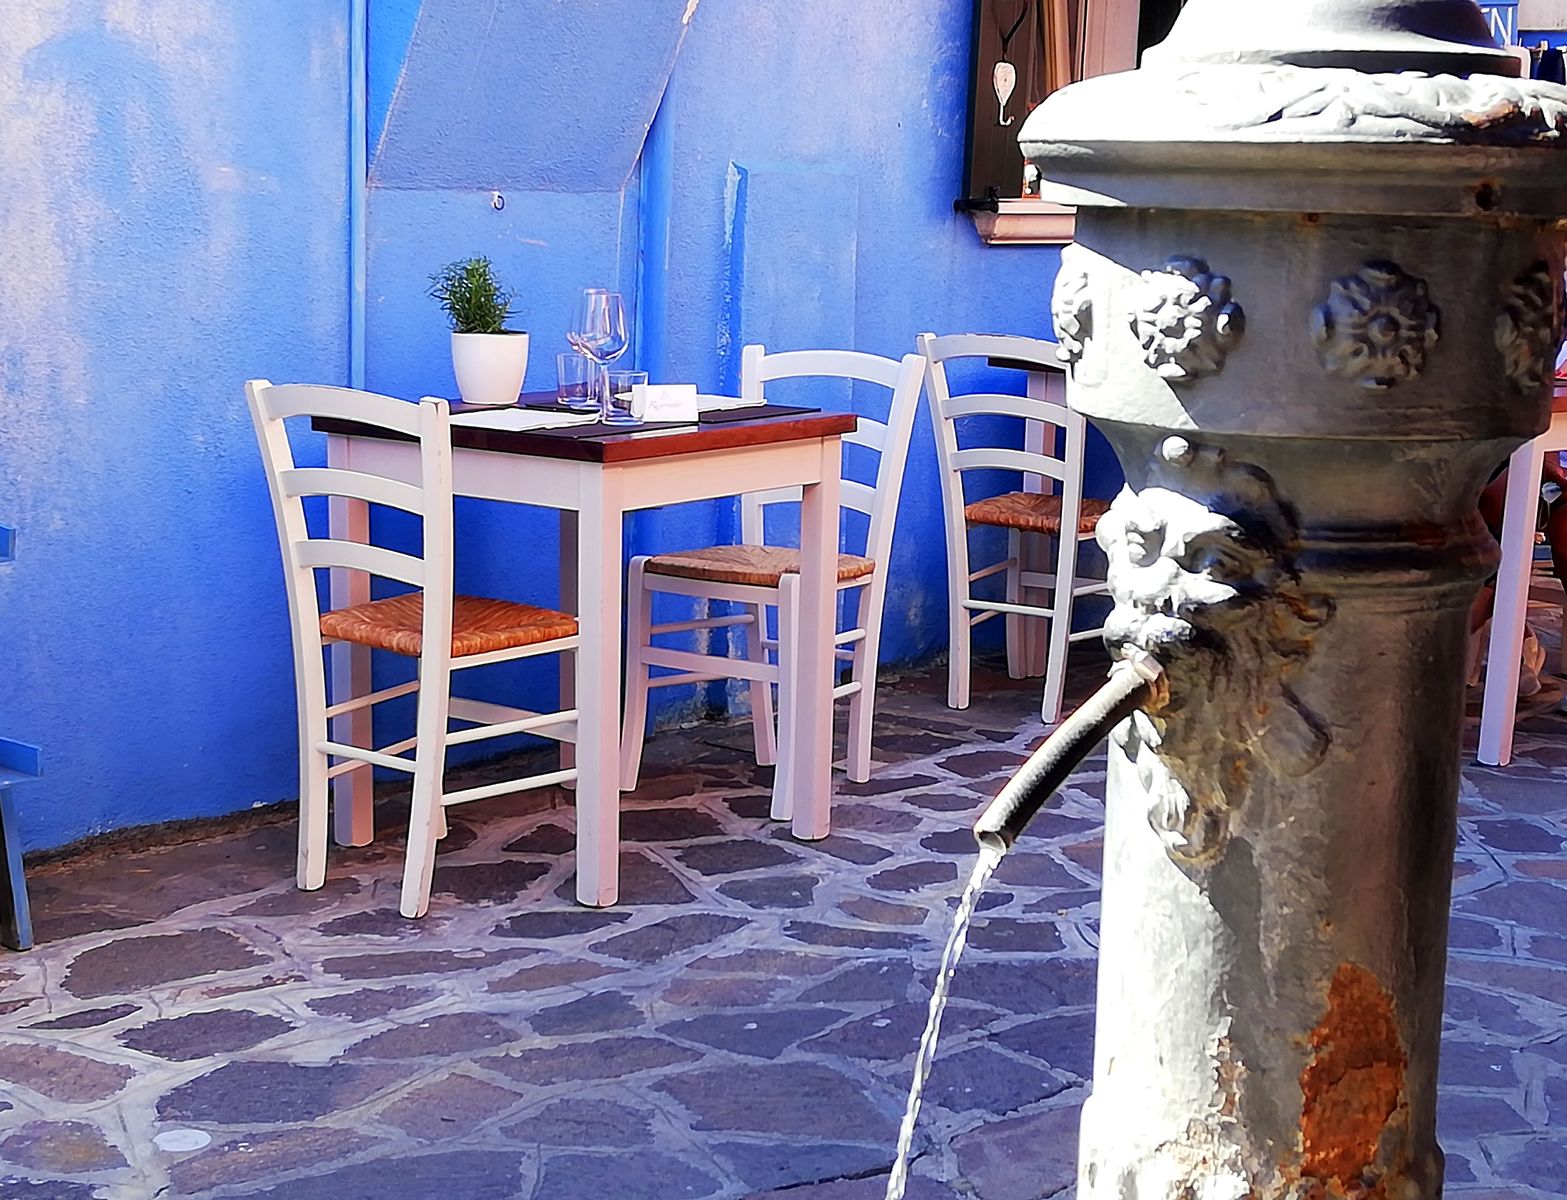 Visiter l'île de Burano et ses terrasses